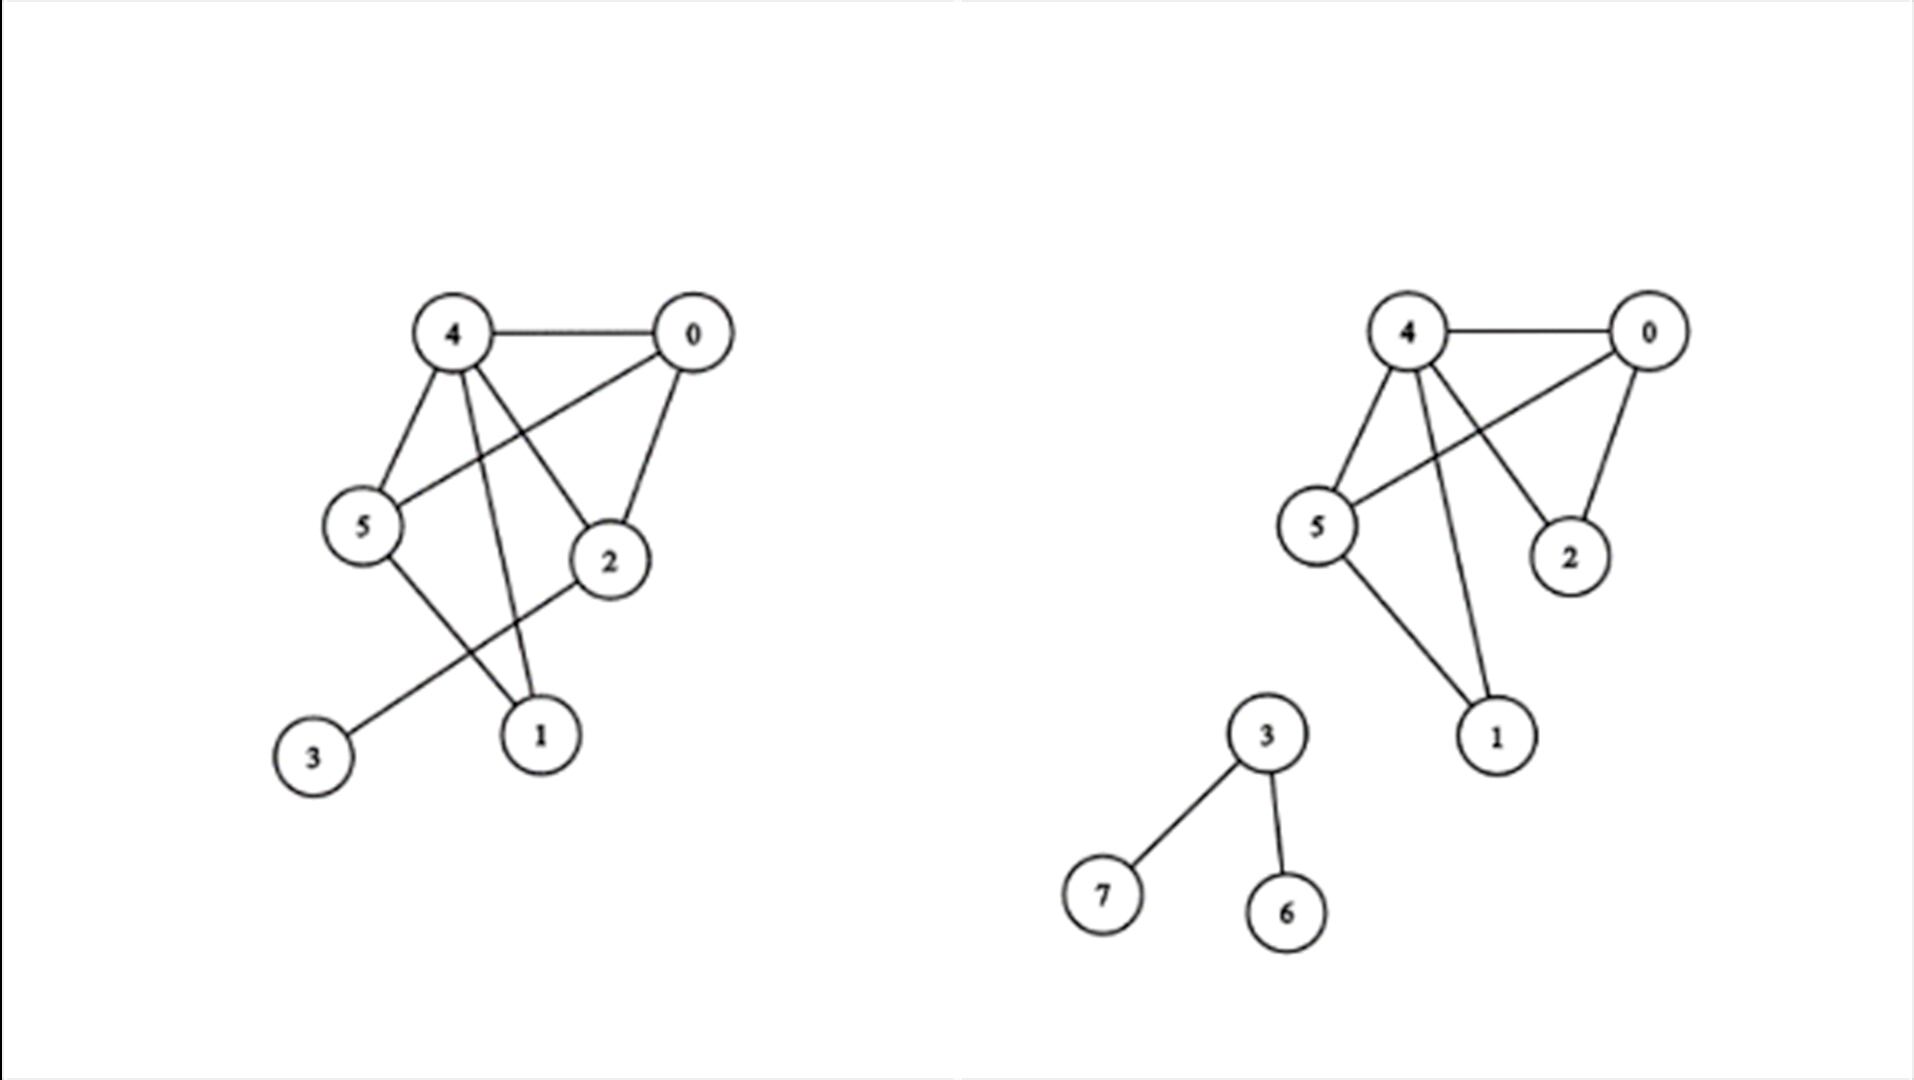 A la derecha, un grafo no conexo. A la izquierda, un grafo conexo.